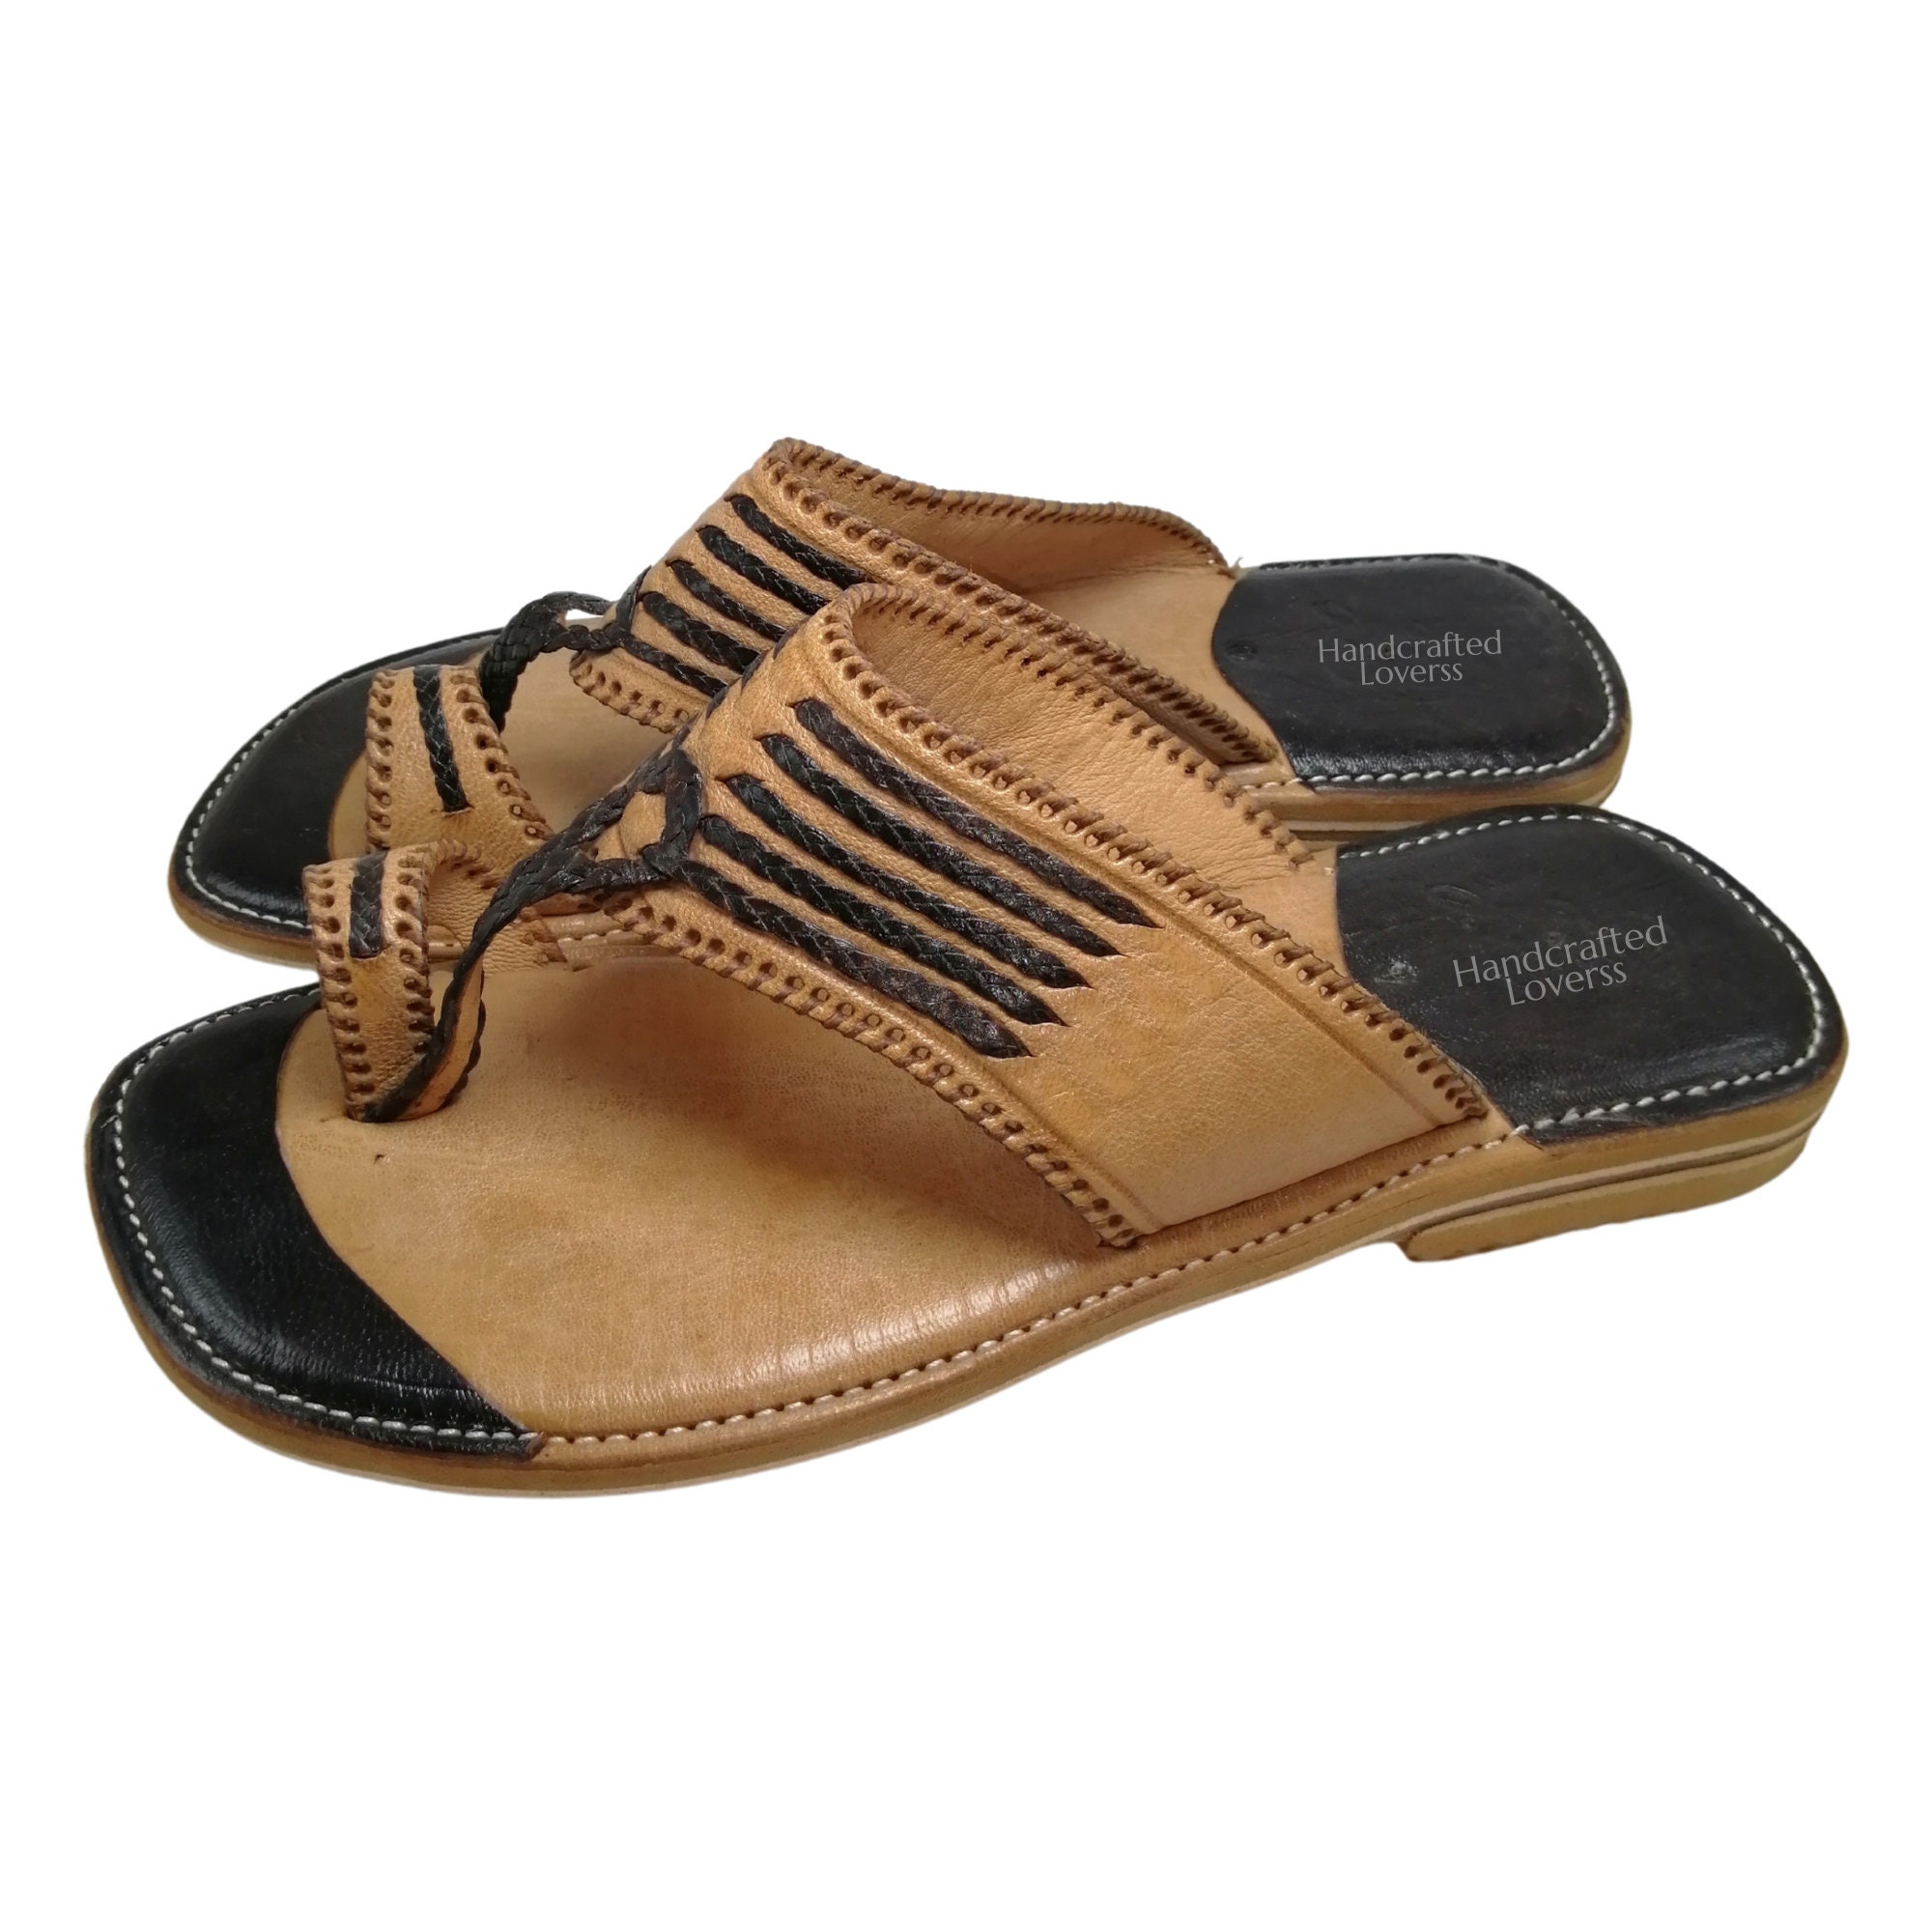 Leather sandals for men sandals handmade sandals moroccan | Etsy